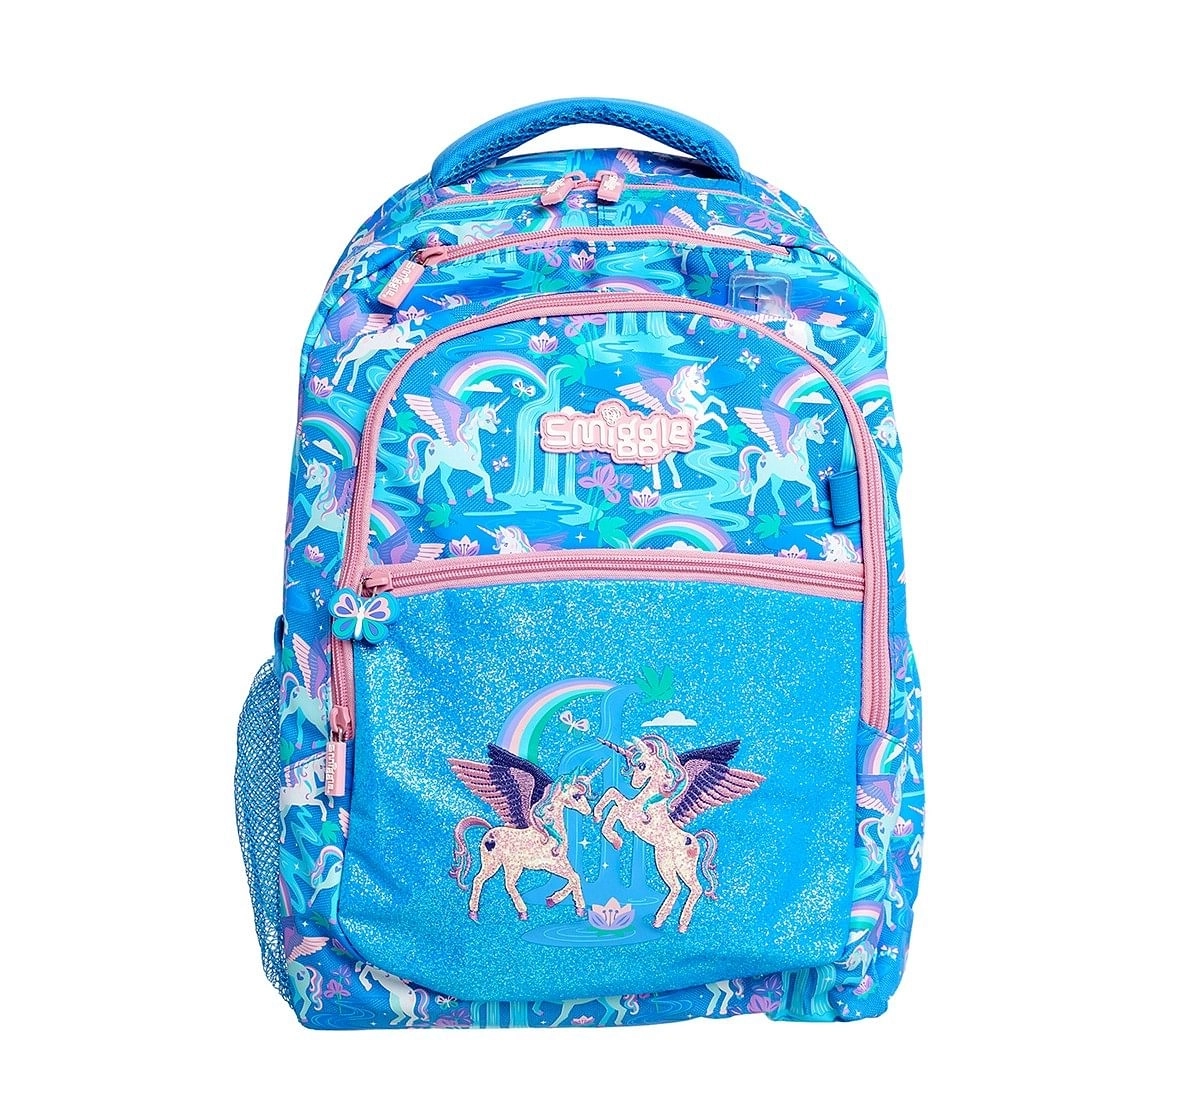 Smiggle Far Away Backpack - Unicorn Print Bags for Kids age 3Y+ (Cornflower Blue)